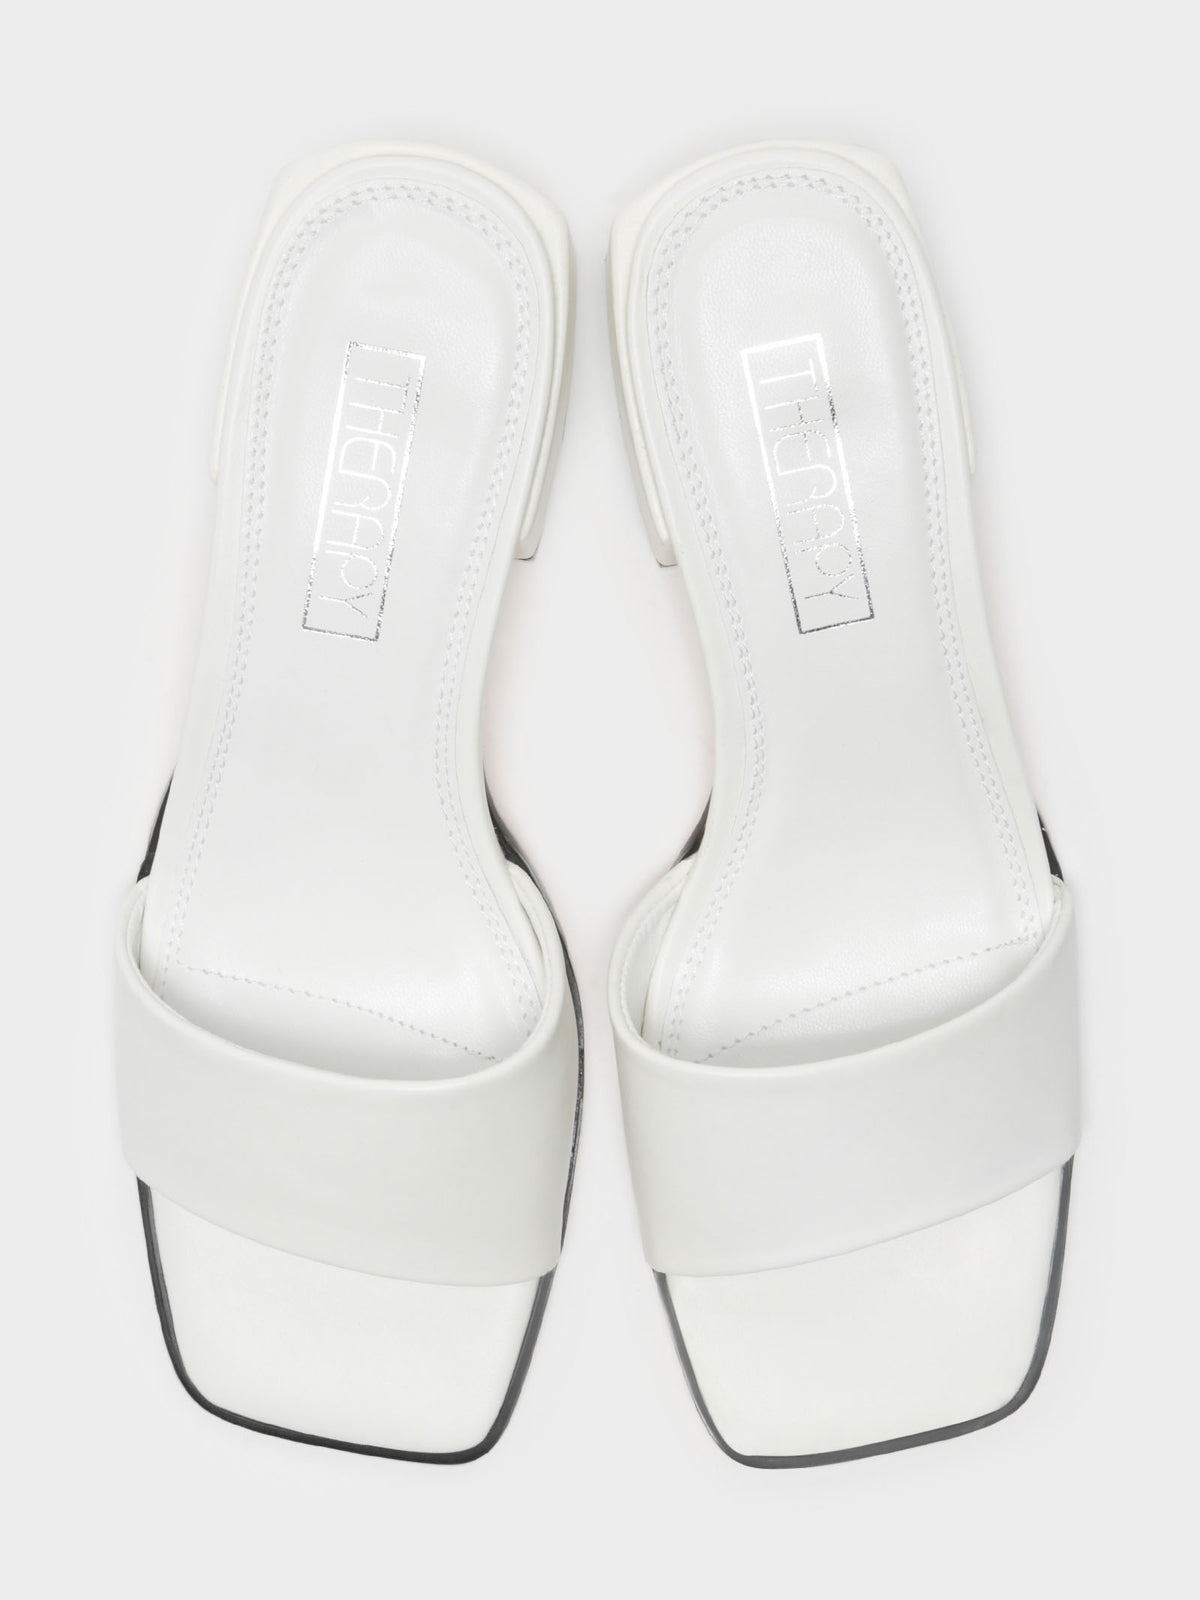 Stormi Heels in White